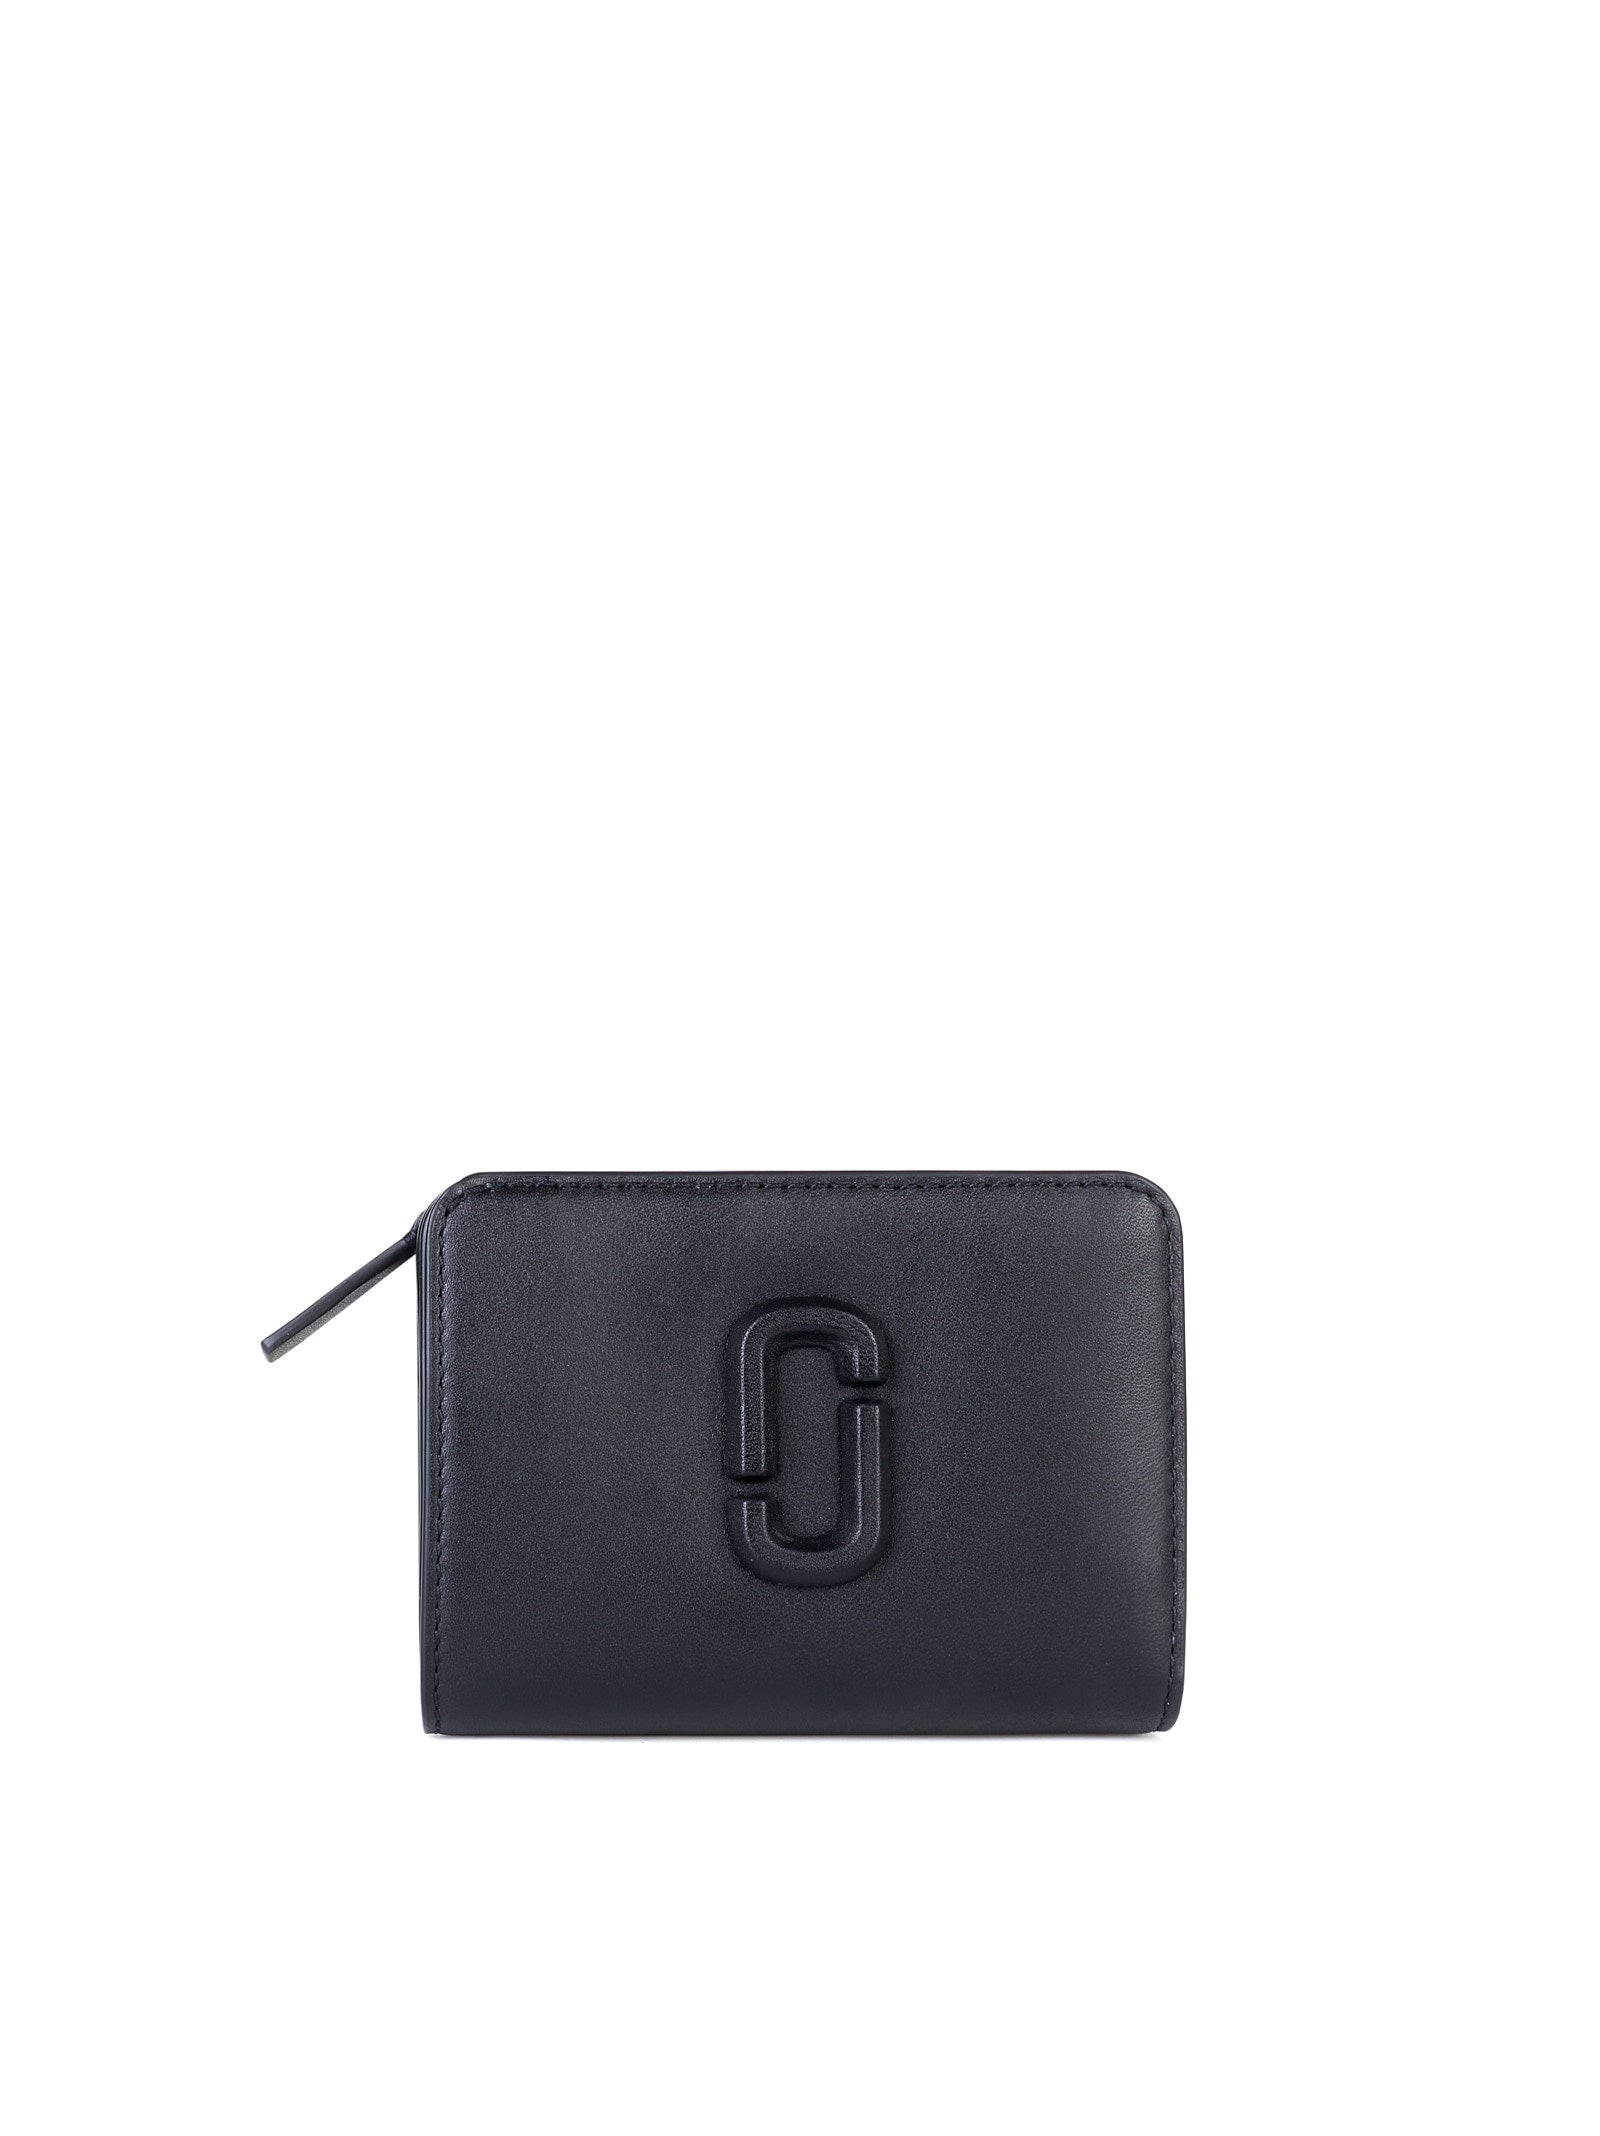 Portafogli MARC JACOBS Mini compact wallet
Black